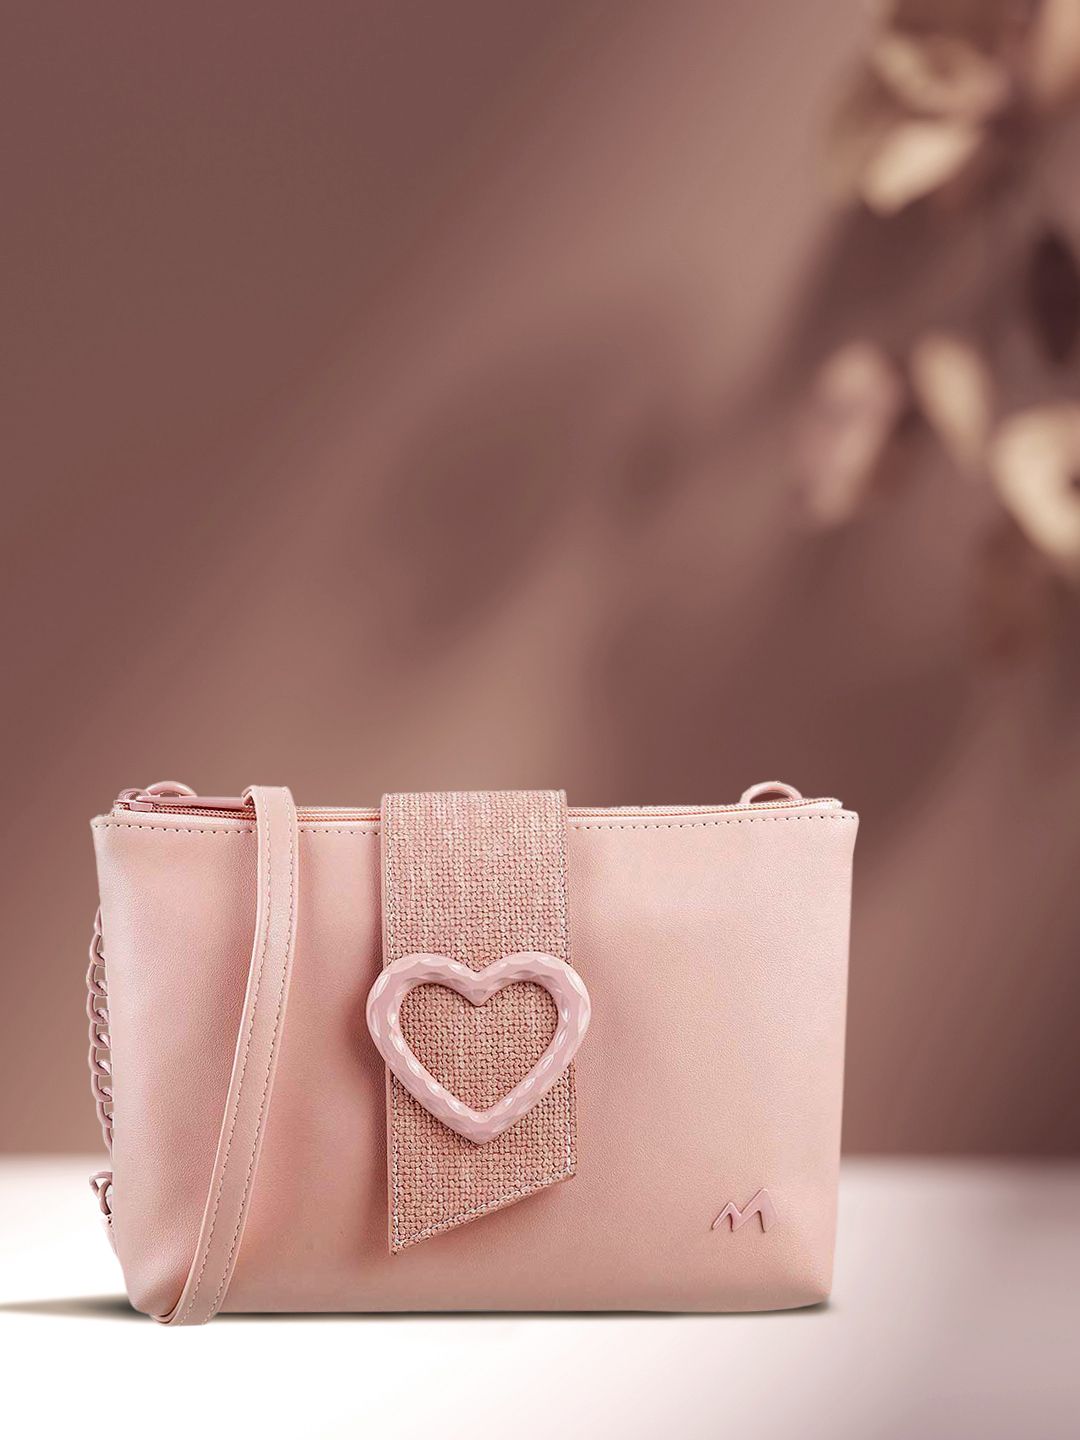 Metro Pink Embellished PU Structured Sling Bag Price in India